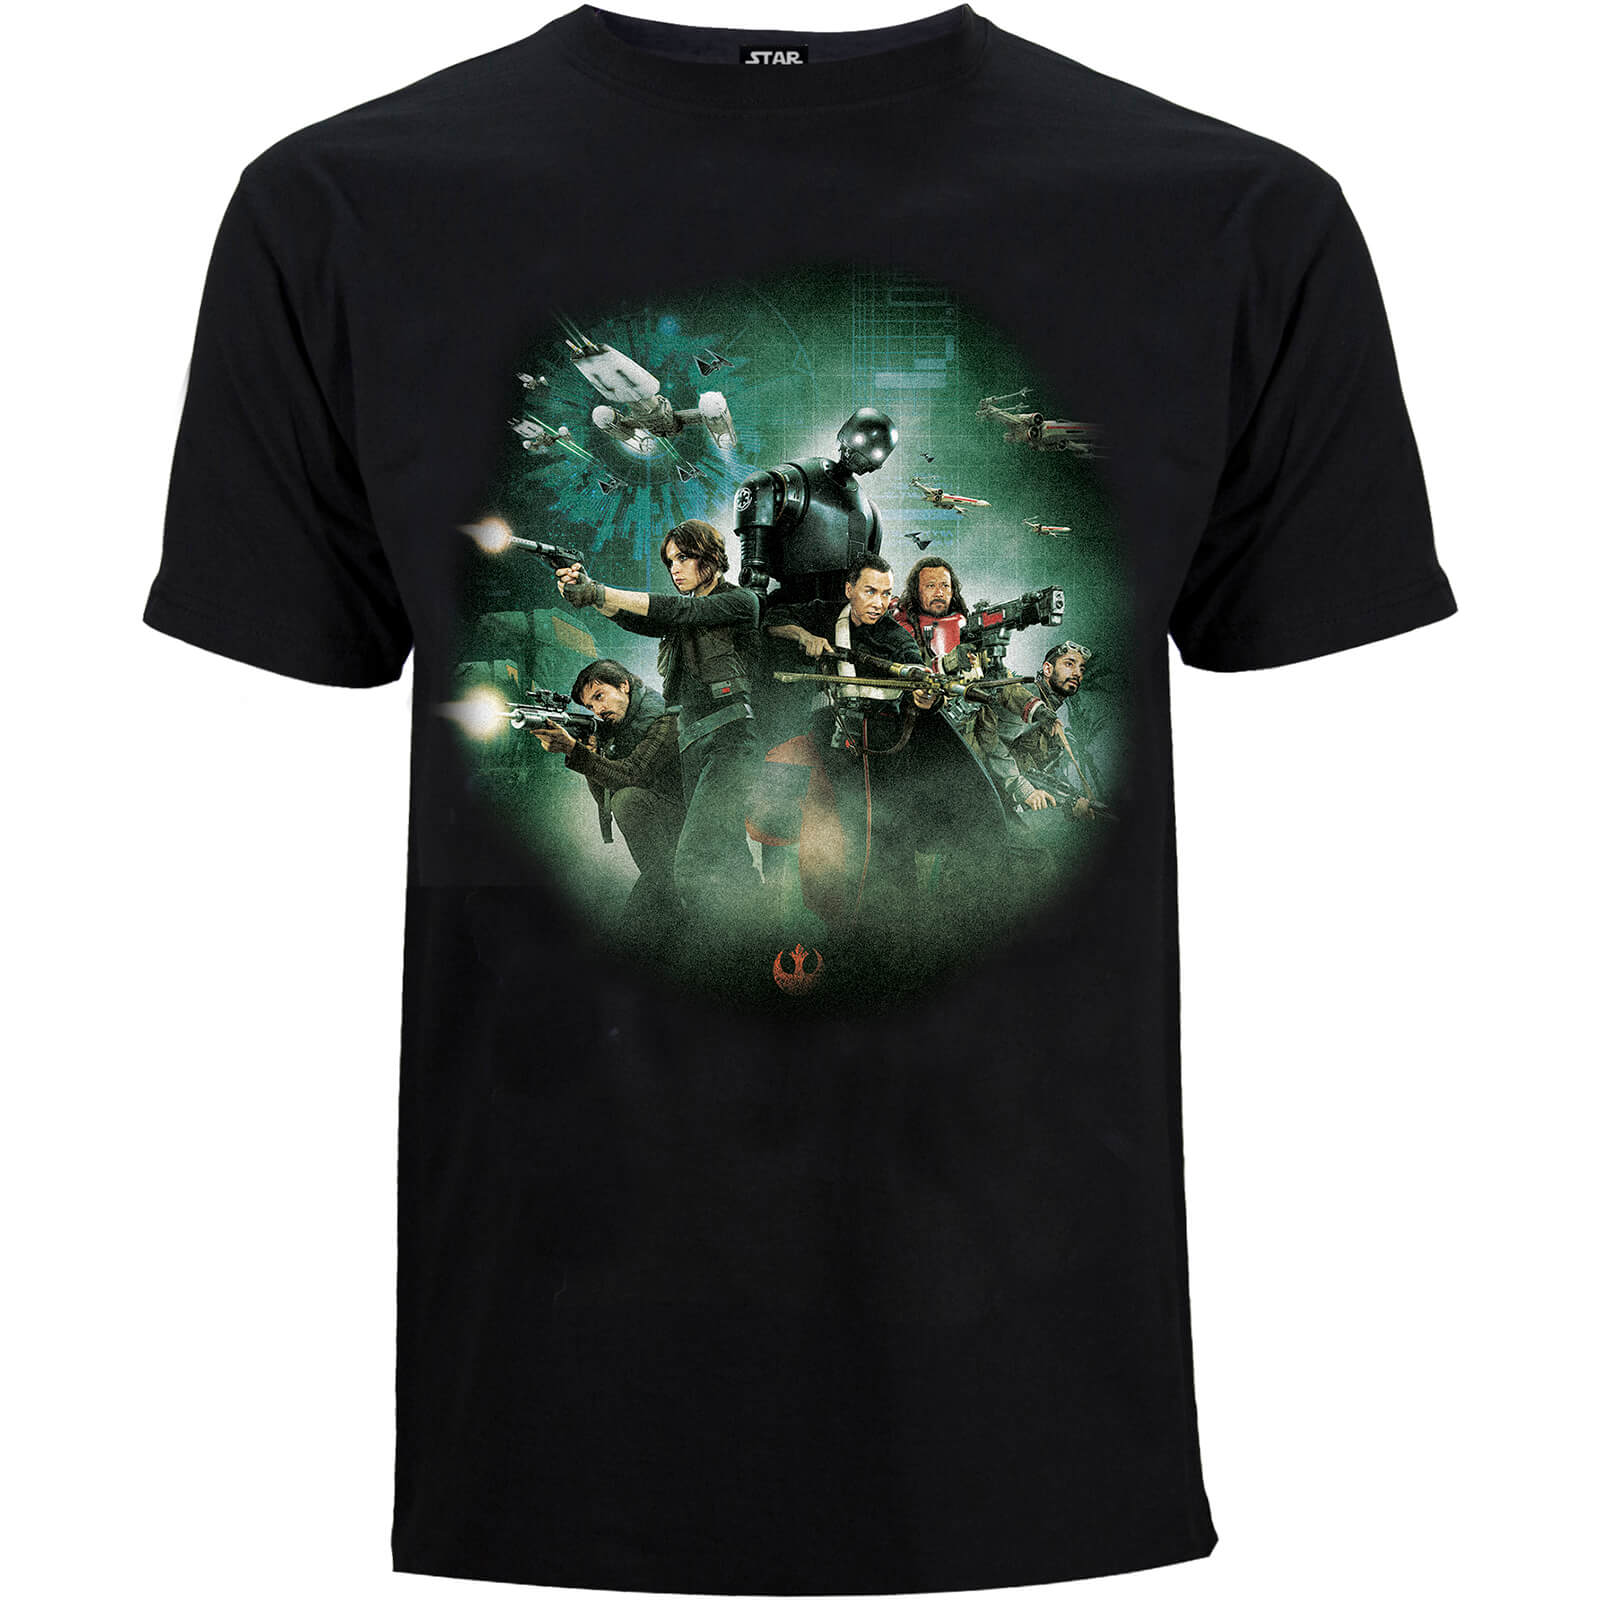 Star Wars Rogue One Men's Group Battle T-Shirt - Black - M